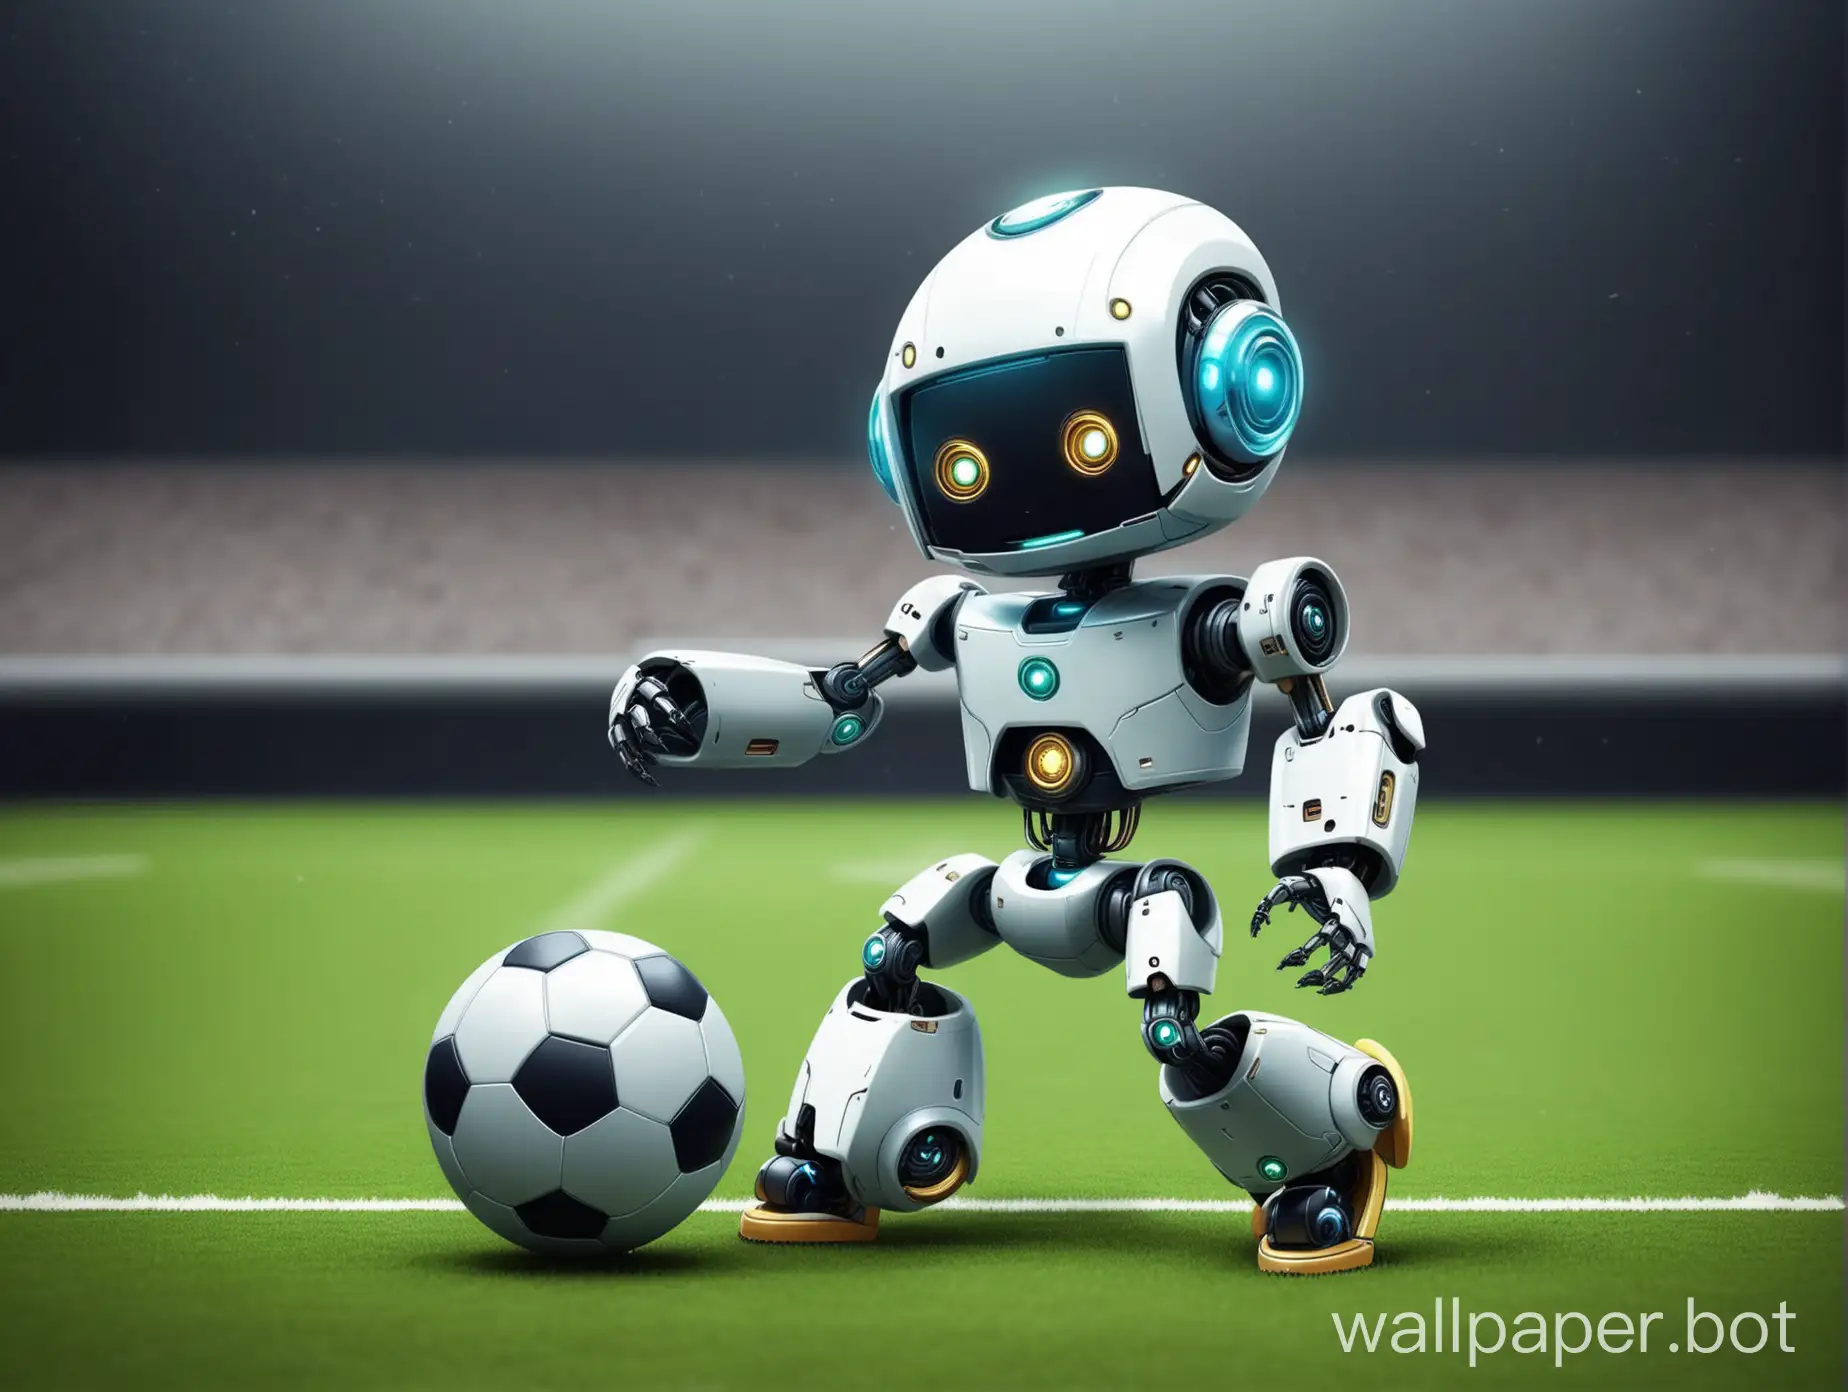 small cute robot play football